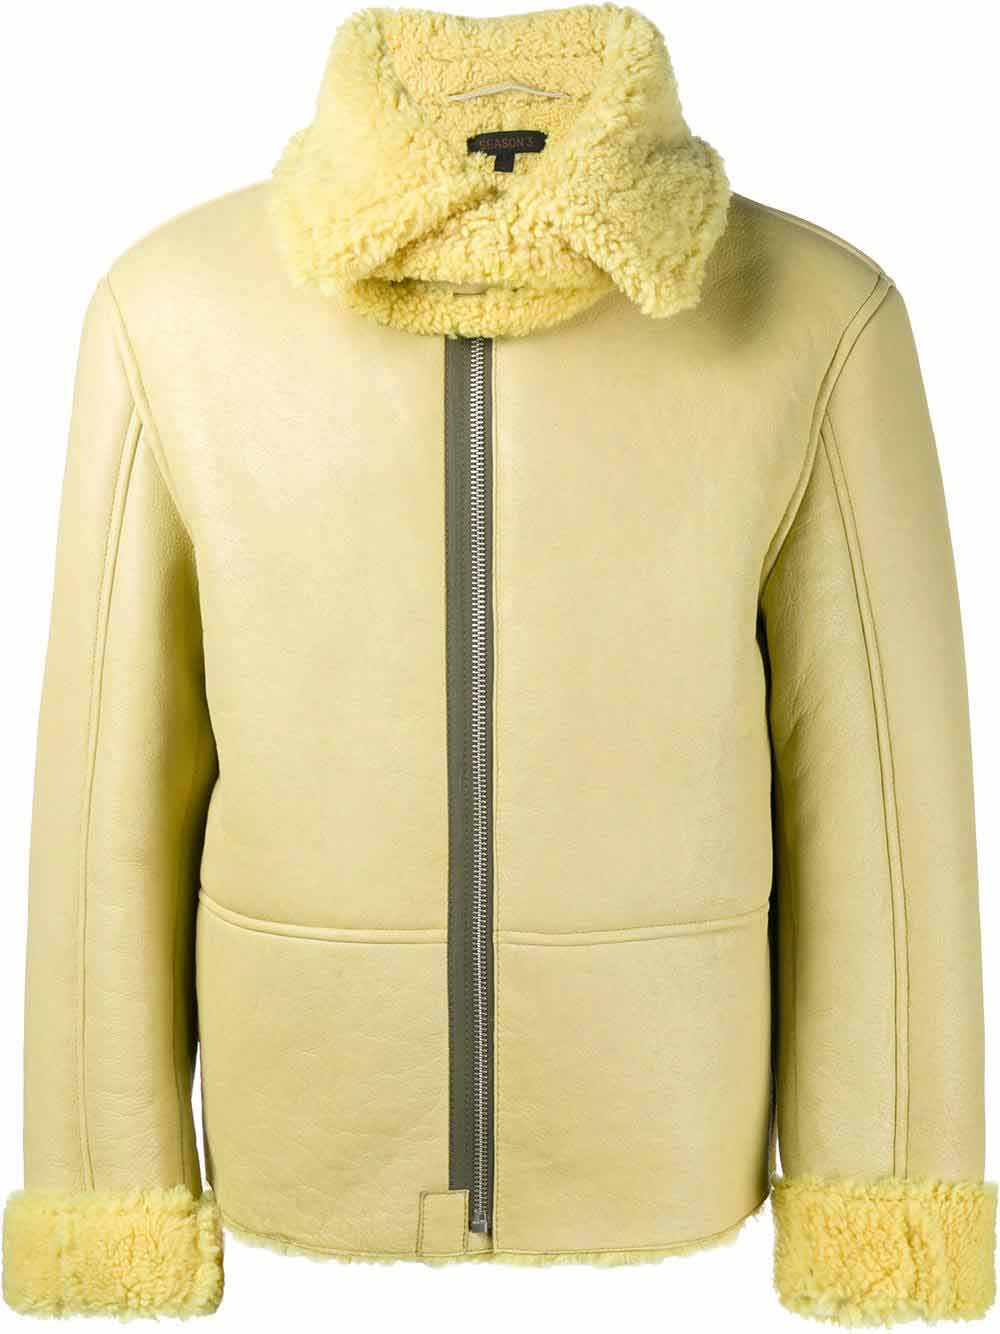 best mens fall/winter jackets by top designer brands